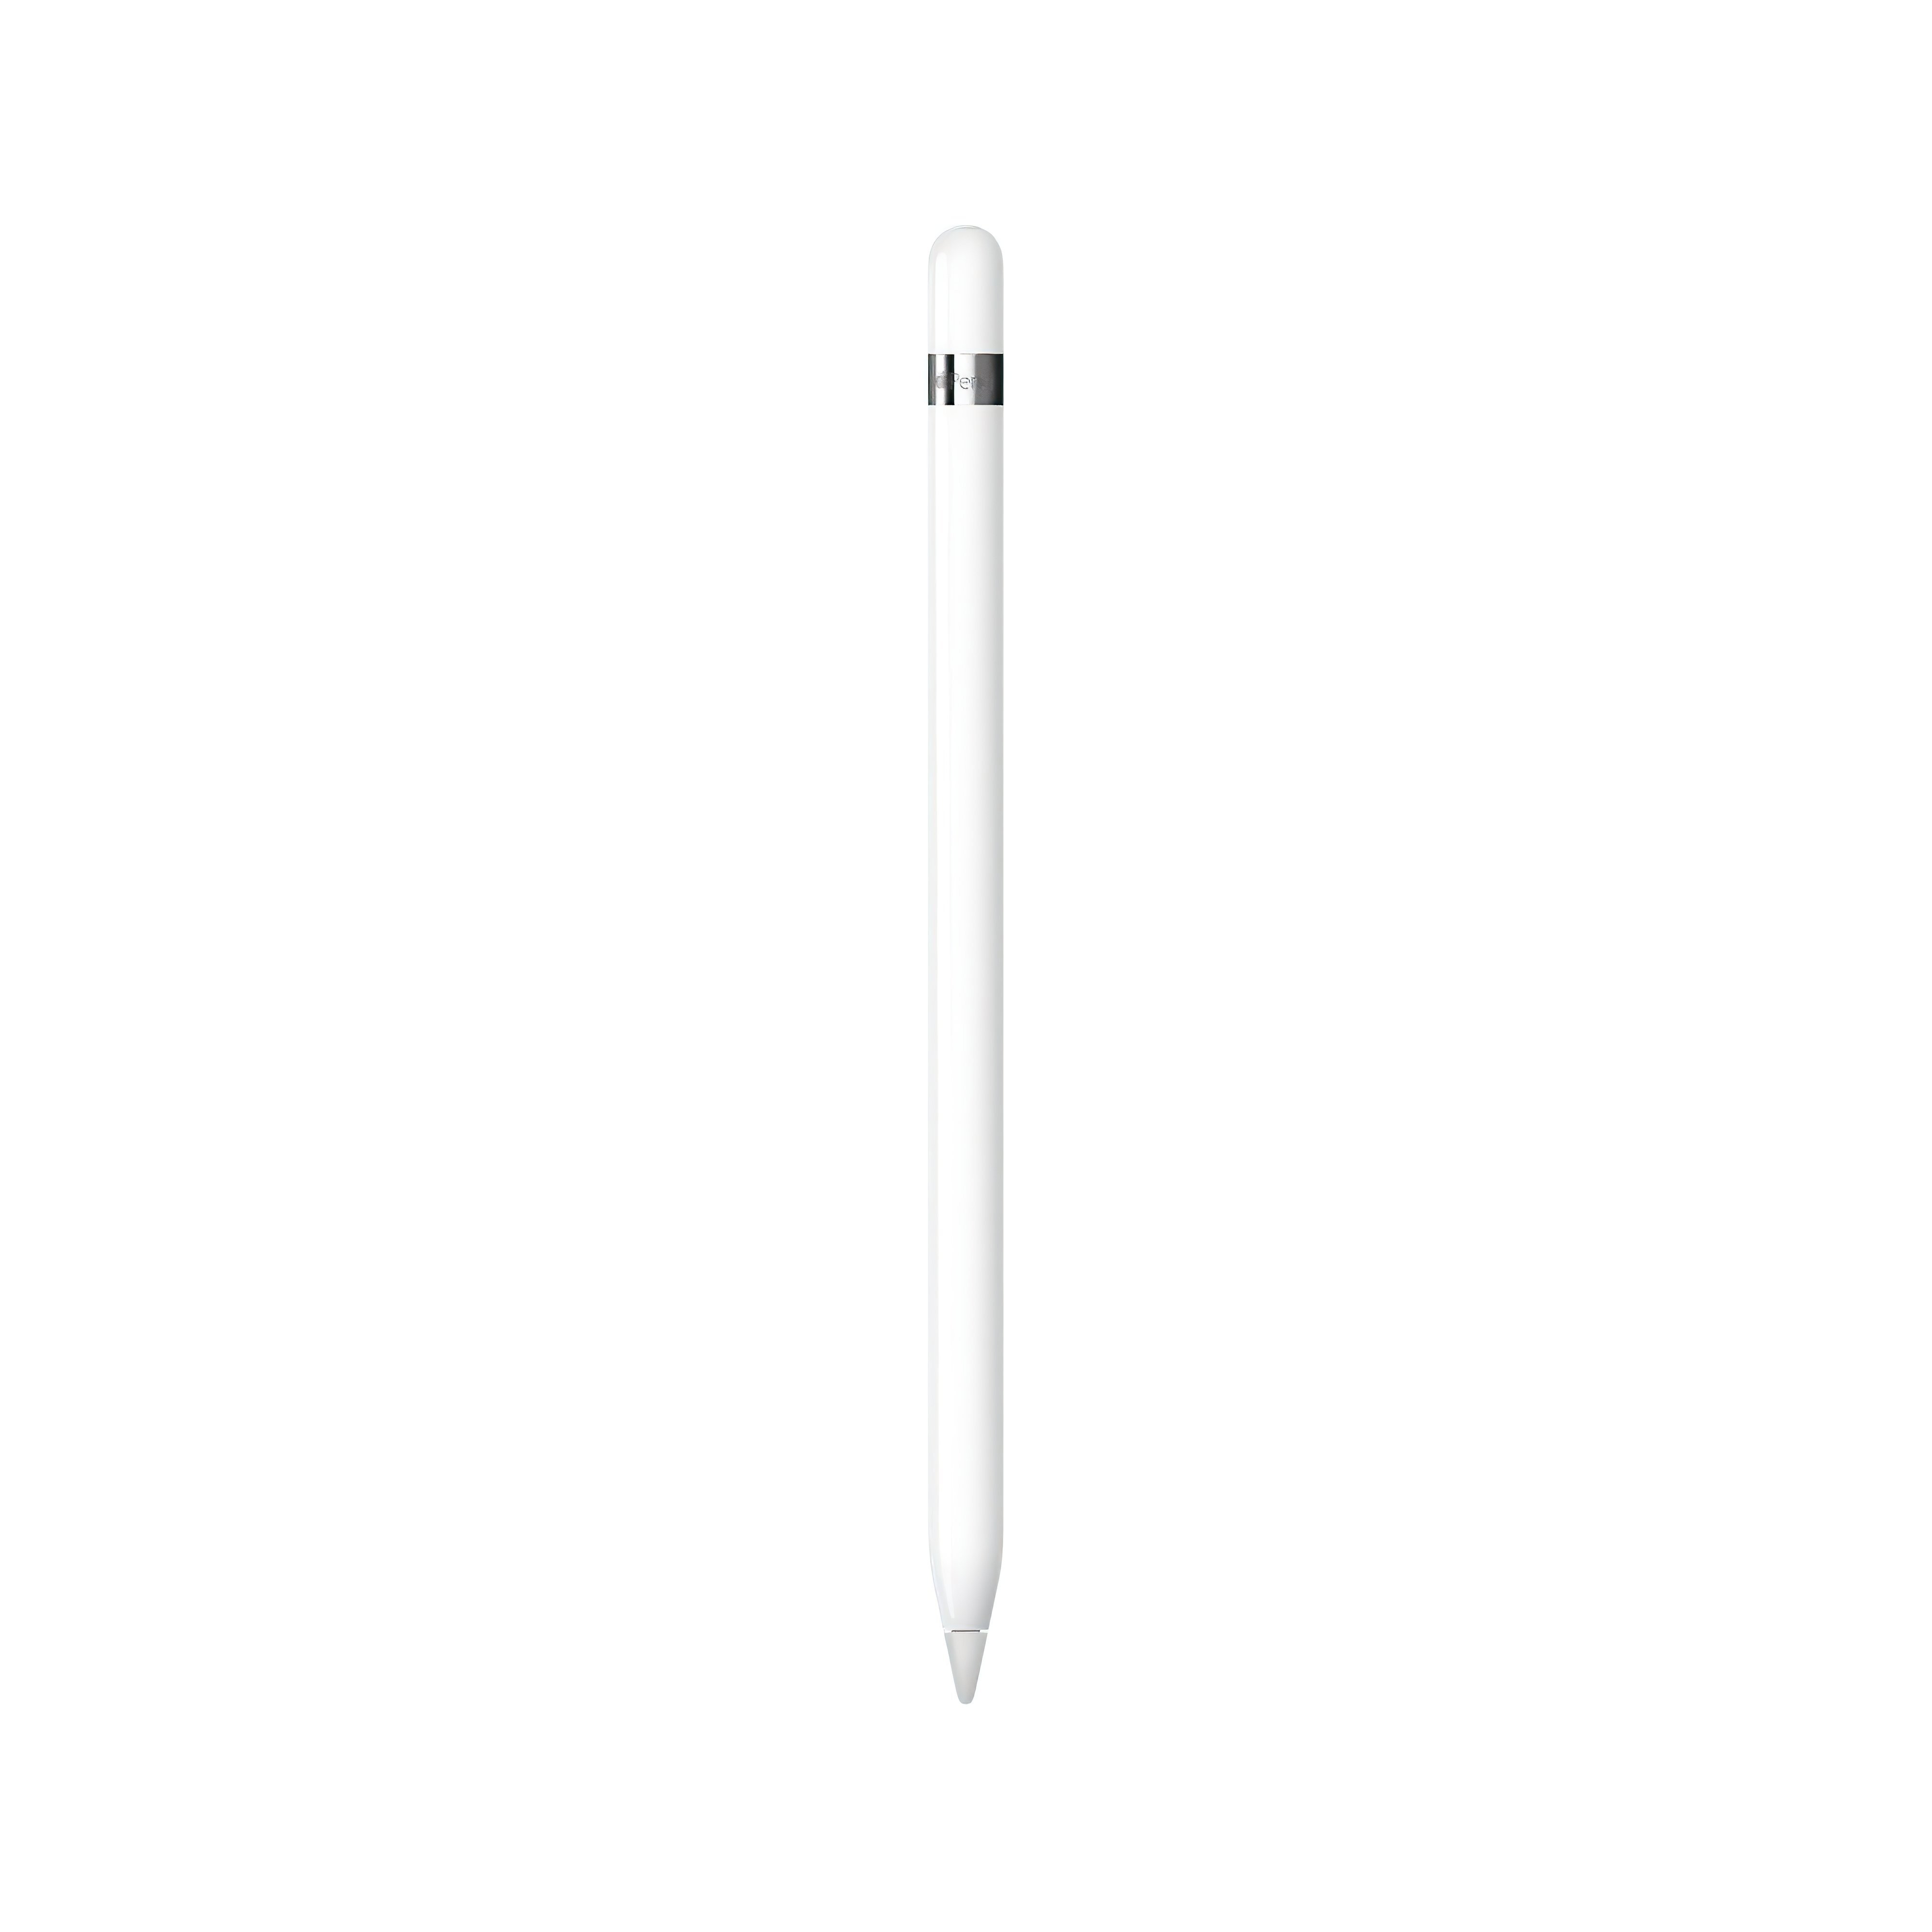  Стилус Apple Pencil для iPad фото1